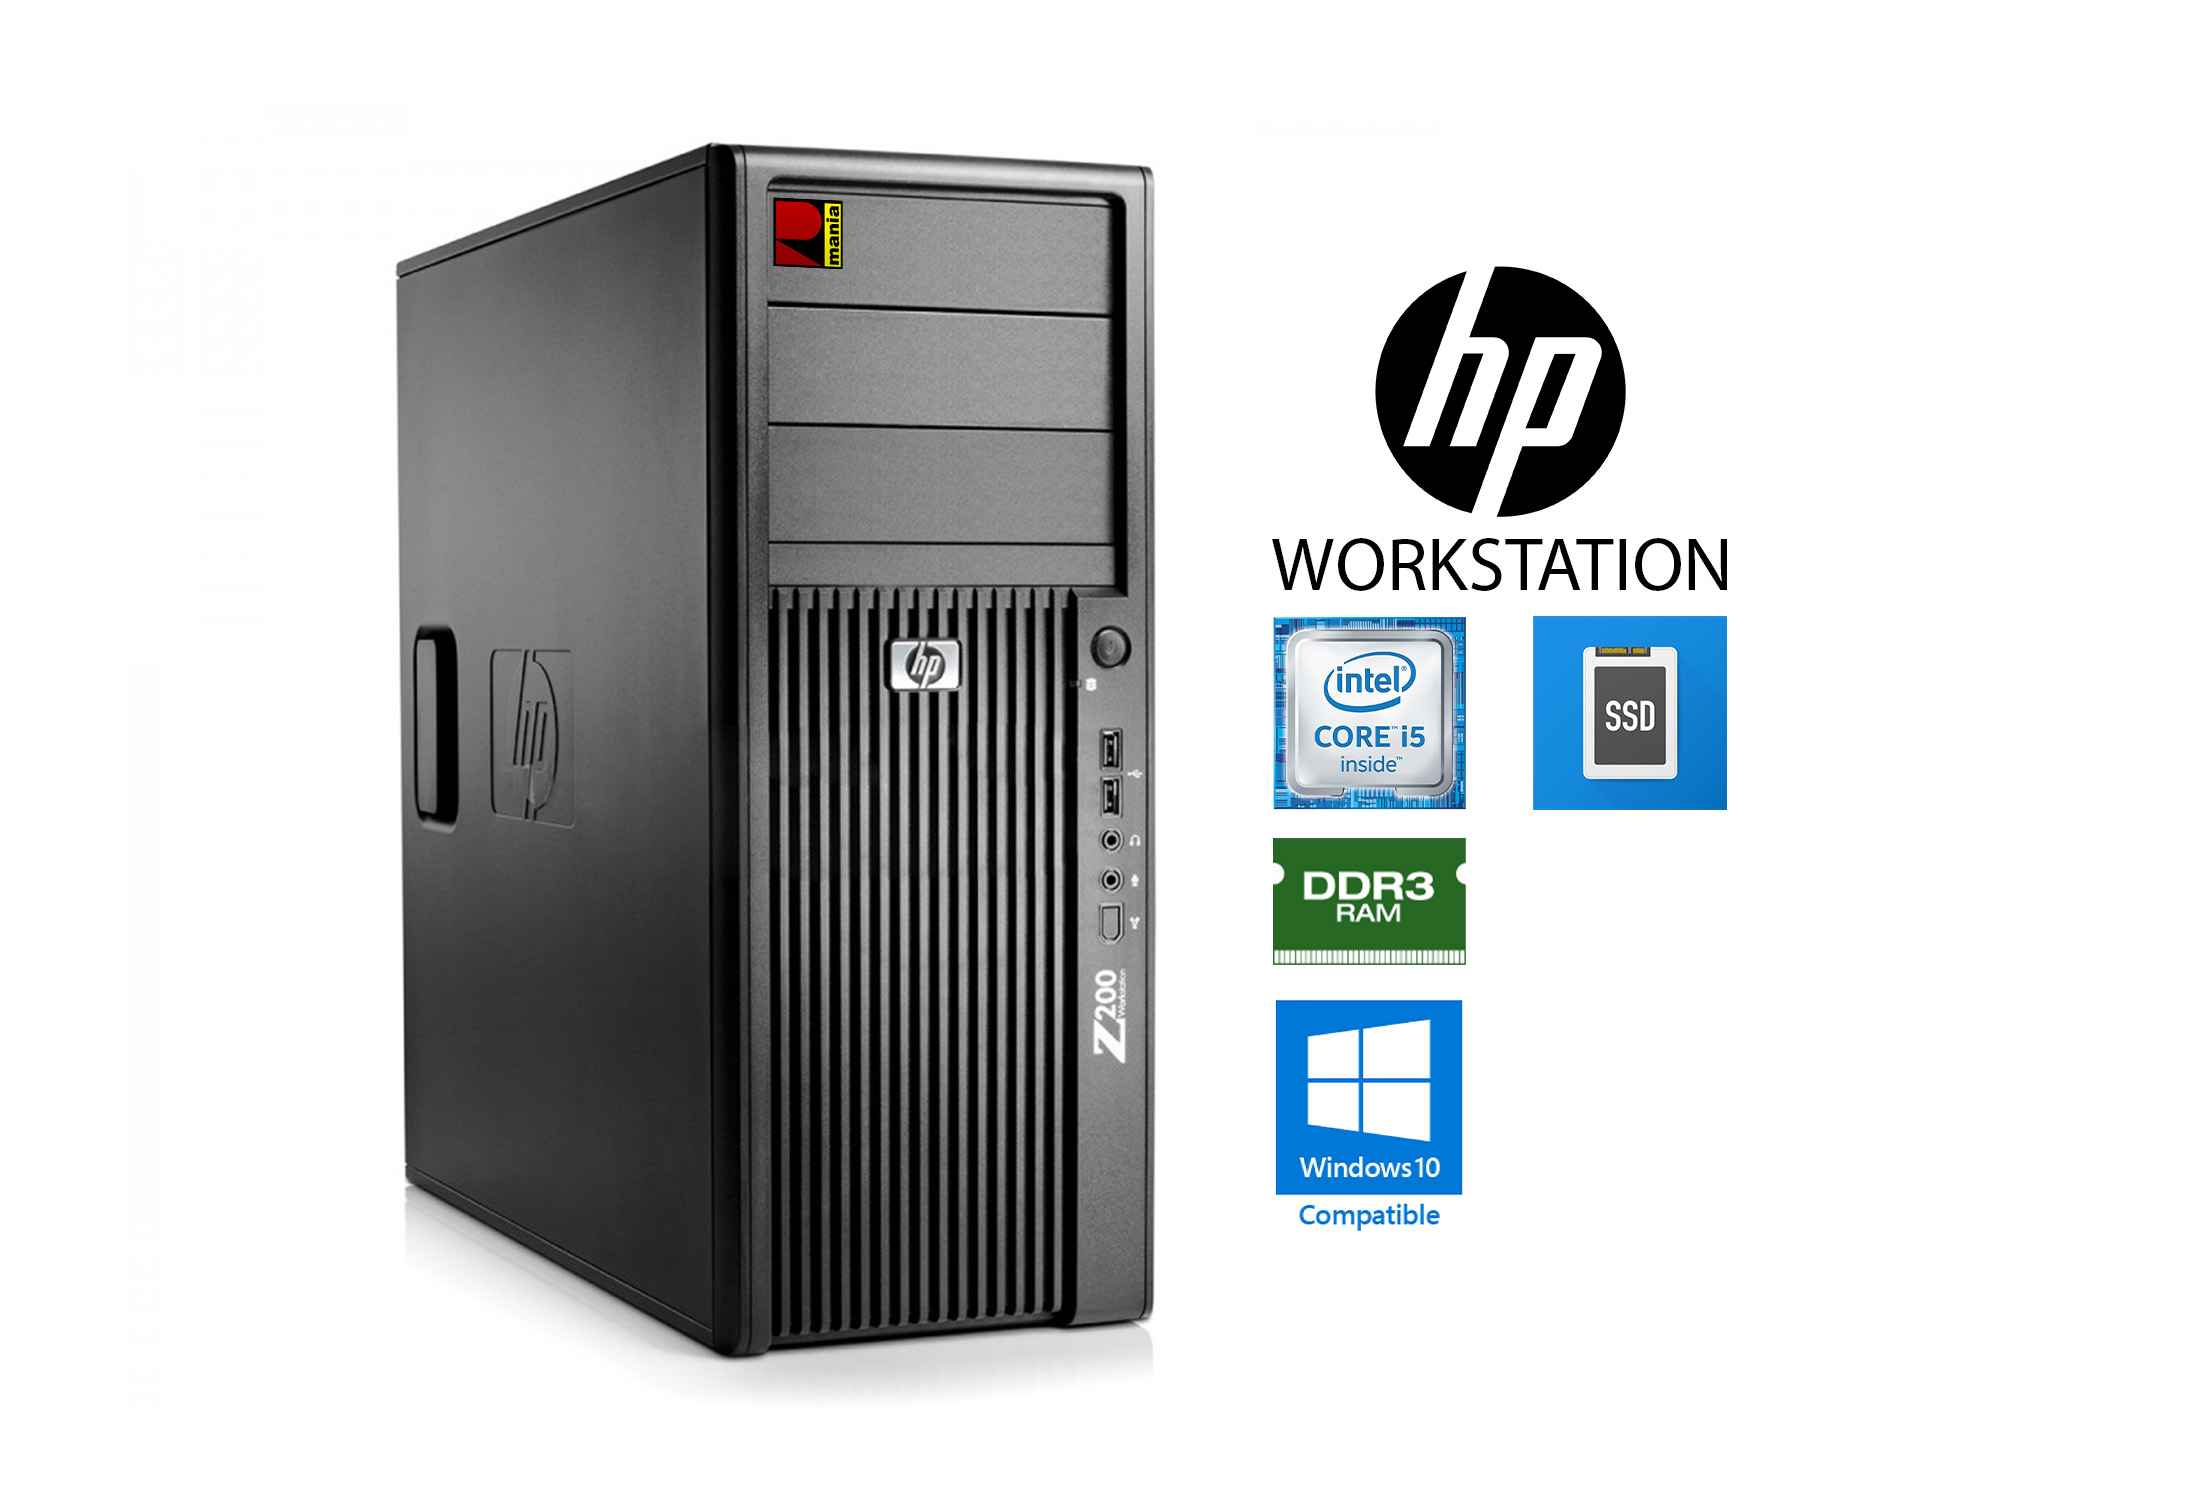 HP Z200 Workstation core i5-650 8GB RAM Quadro FX 380